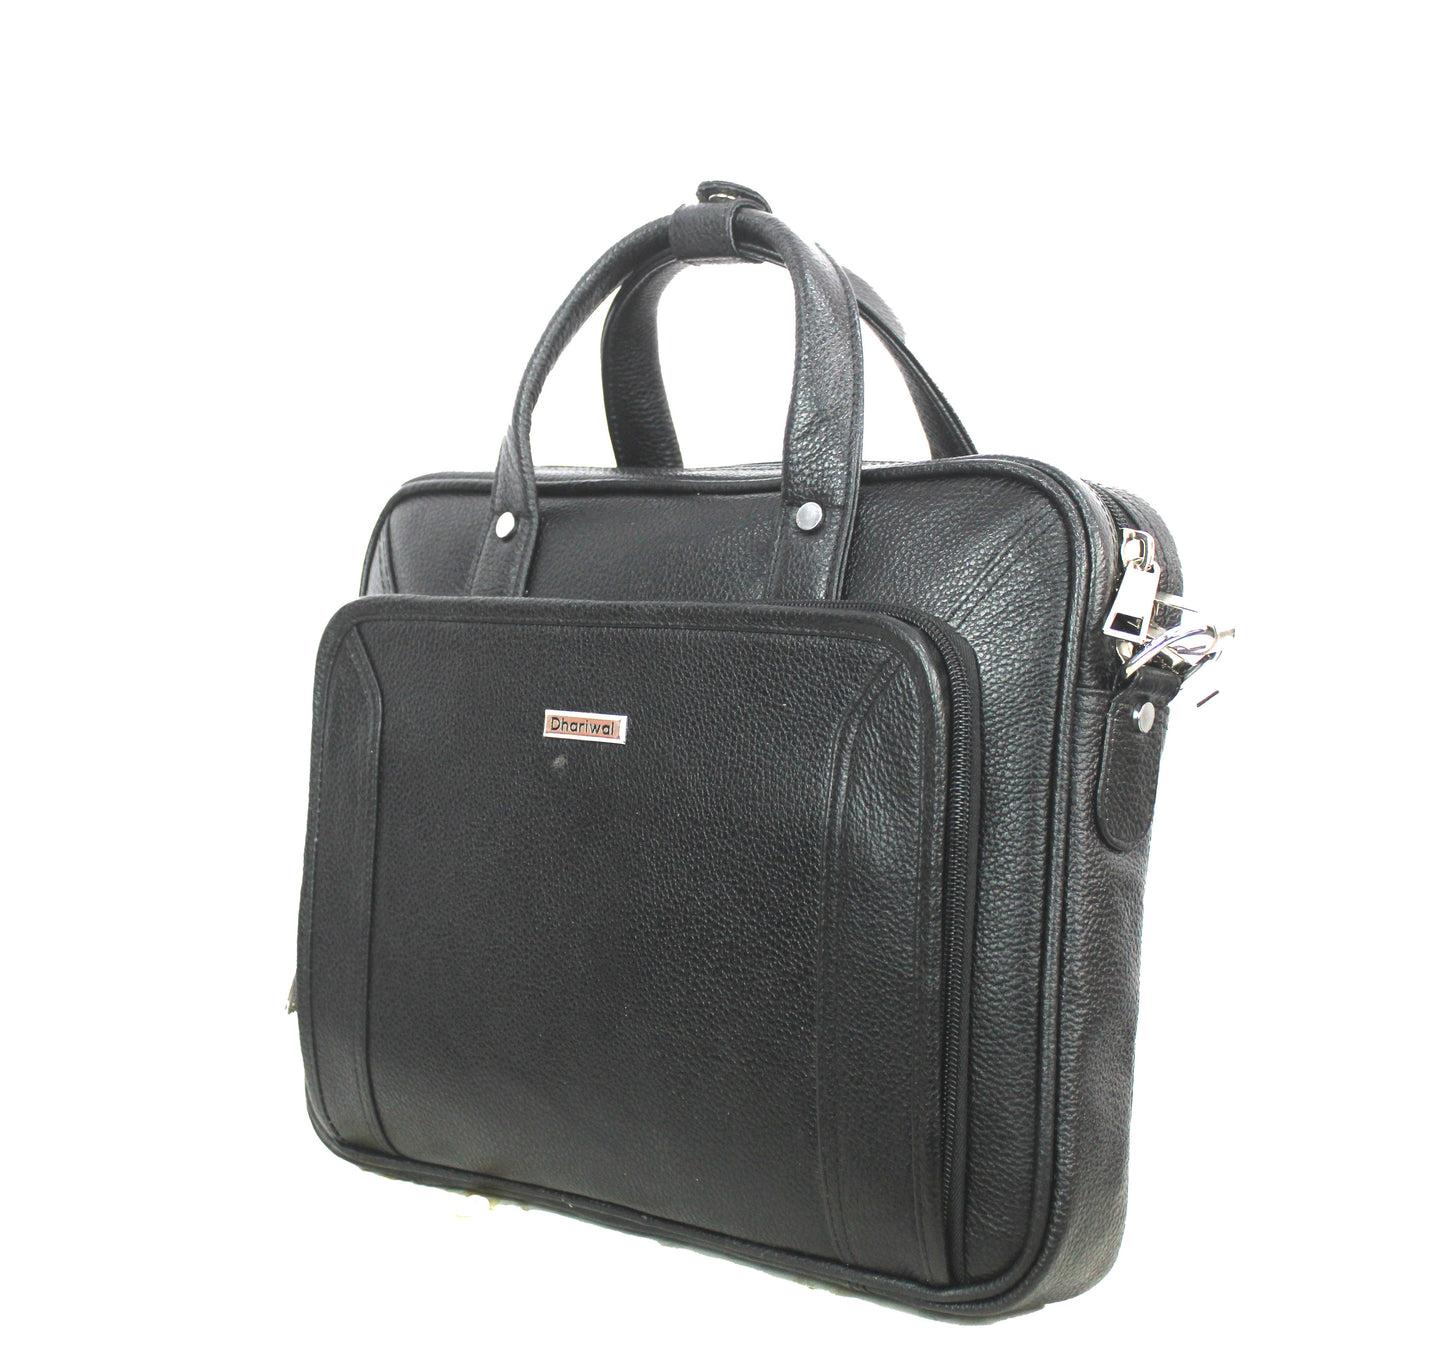 Dhariwal Genuine Leather Laptop Bag File Messenger Bag with Strap upto 13 Inch | Laptop Bag for Men EB-612 Executive Bags Dhariwal 